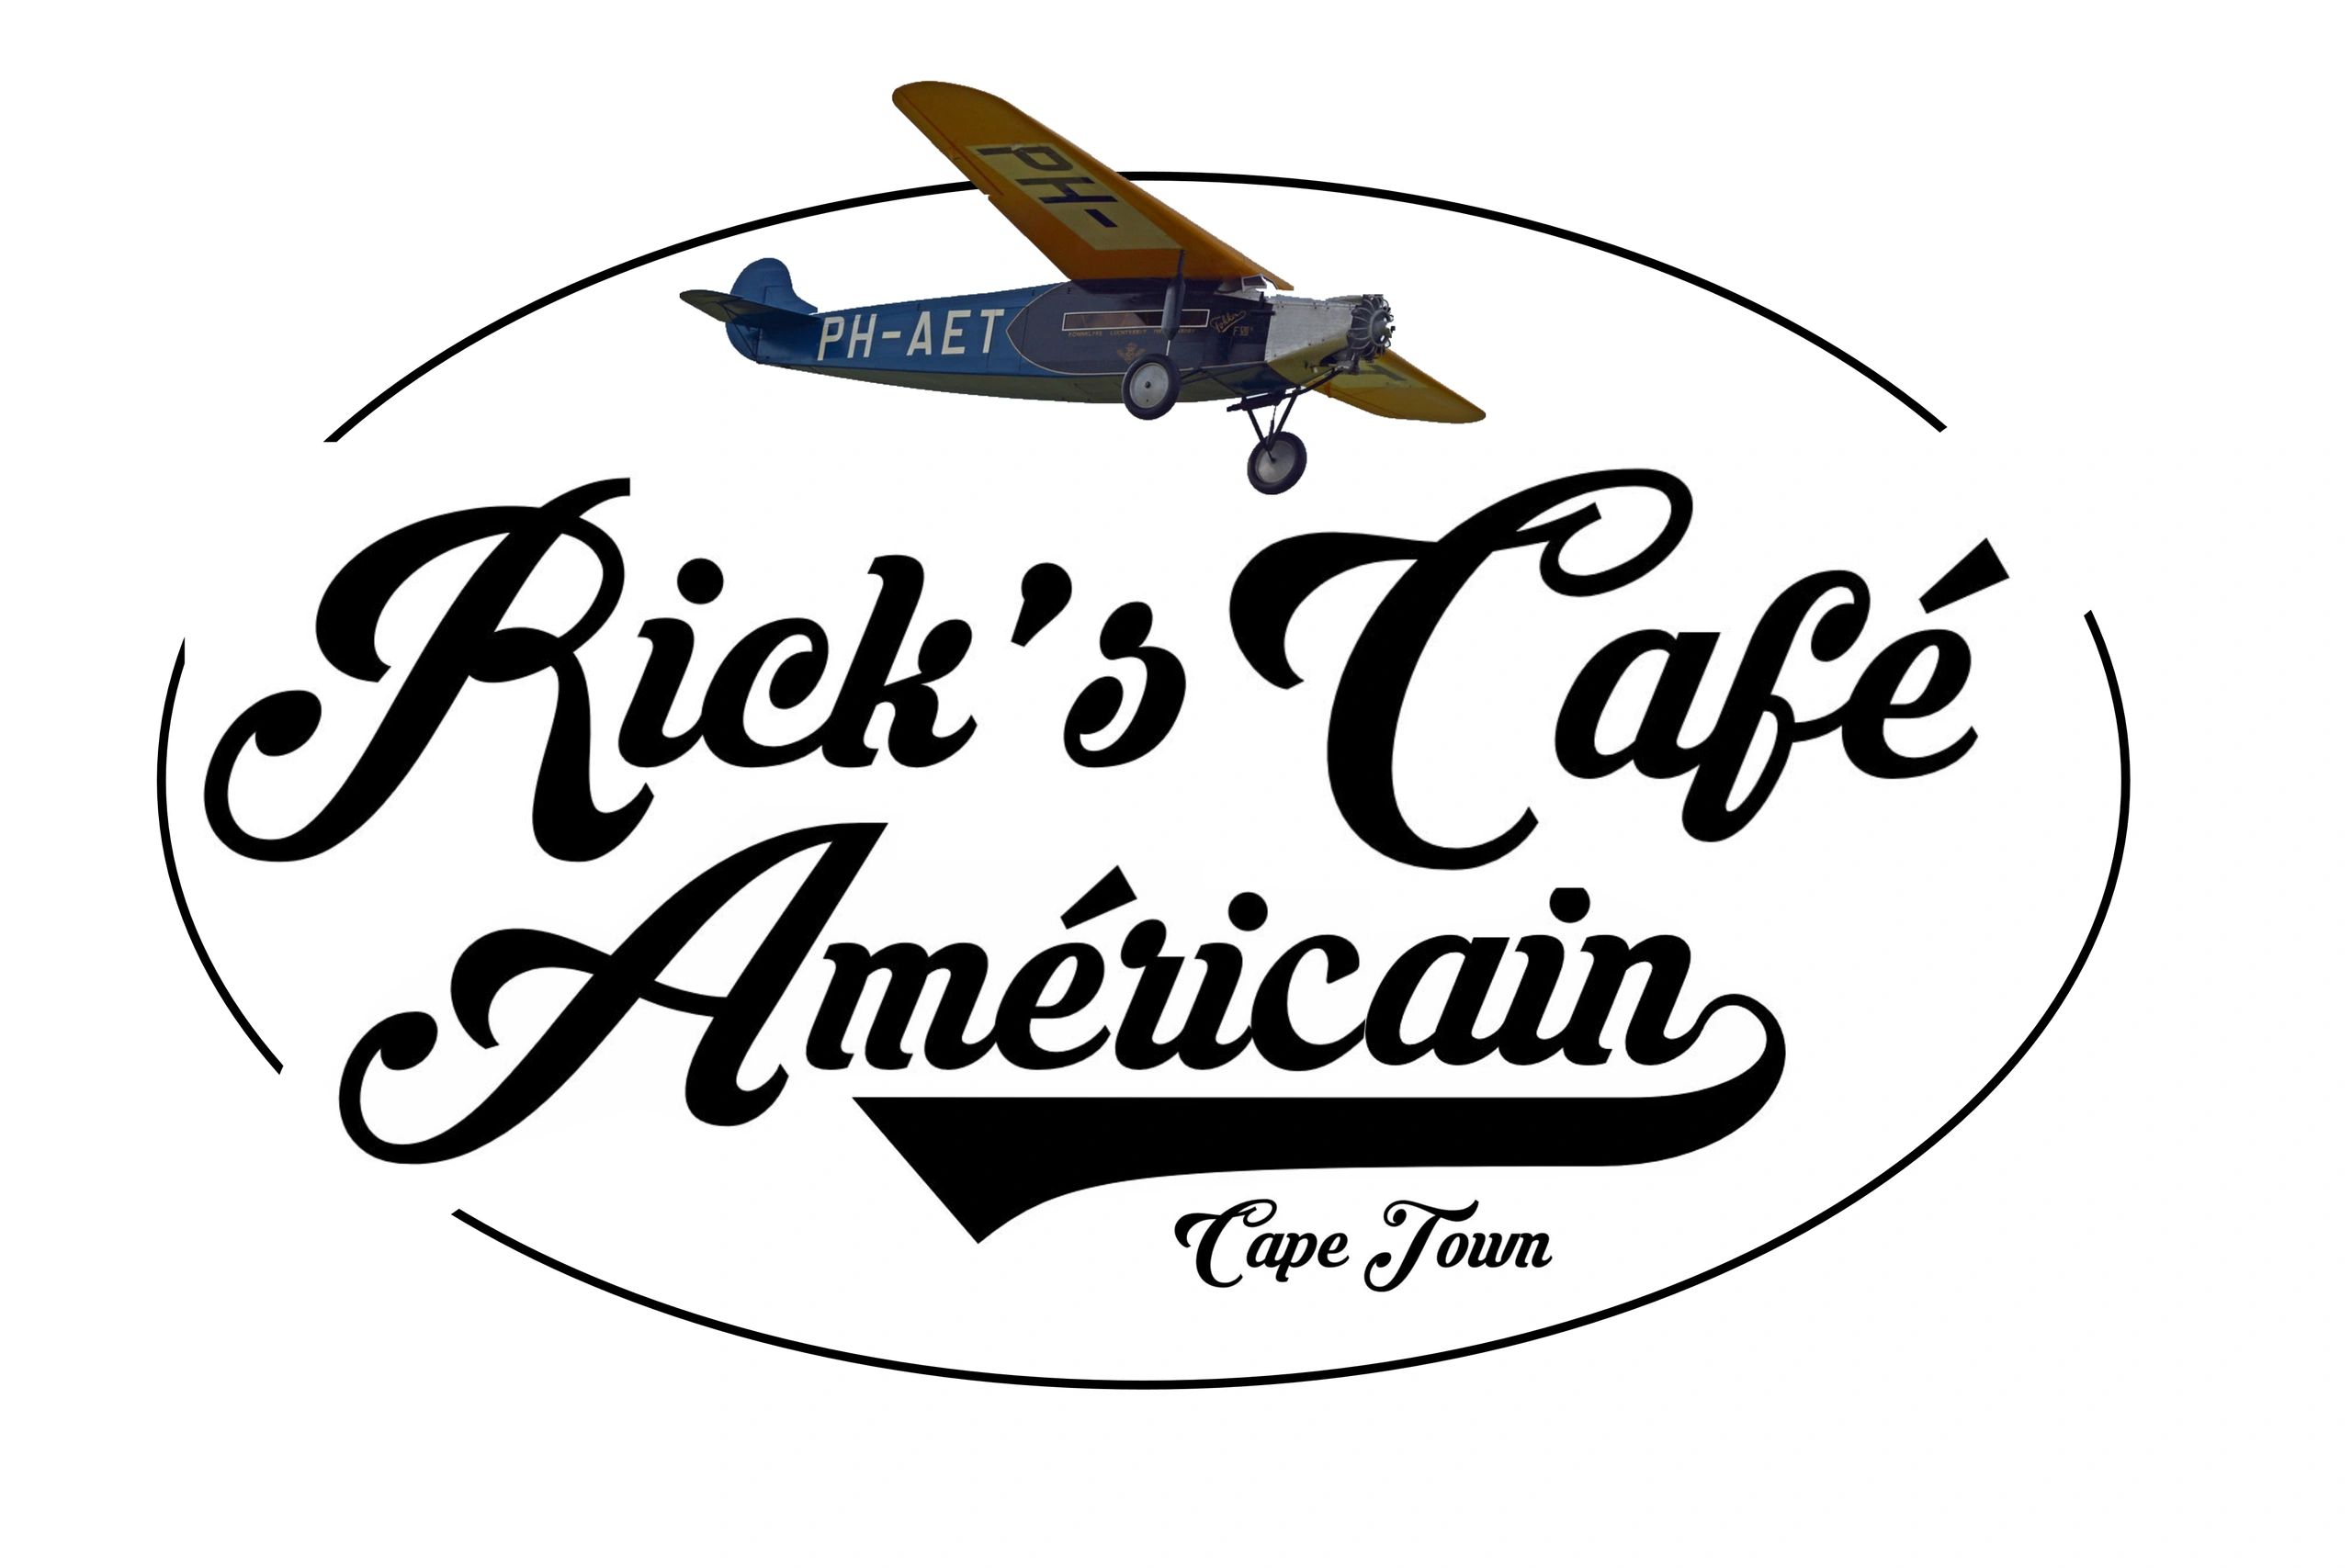 اغمى عليه صقلية استبيان cafe americain cape town - thomashomesva.com